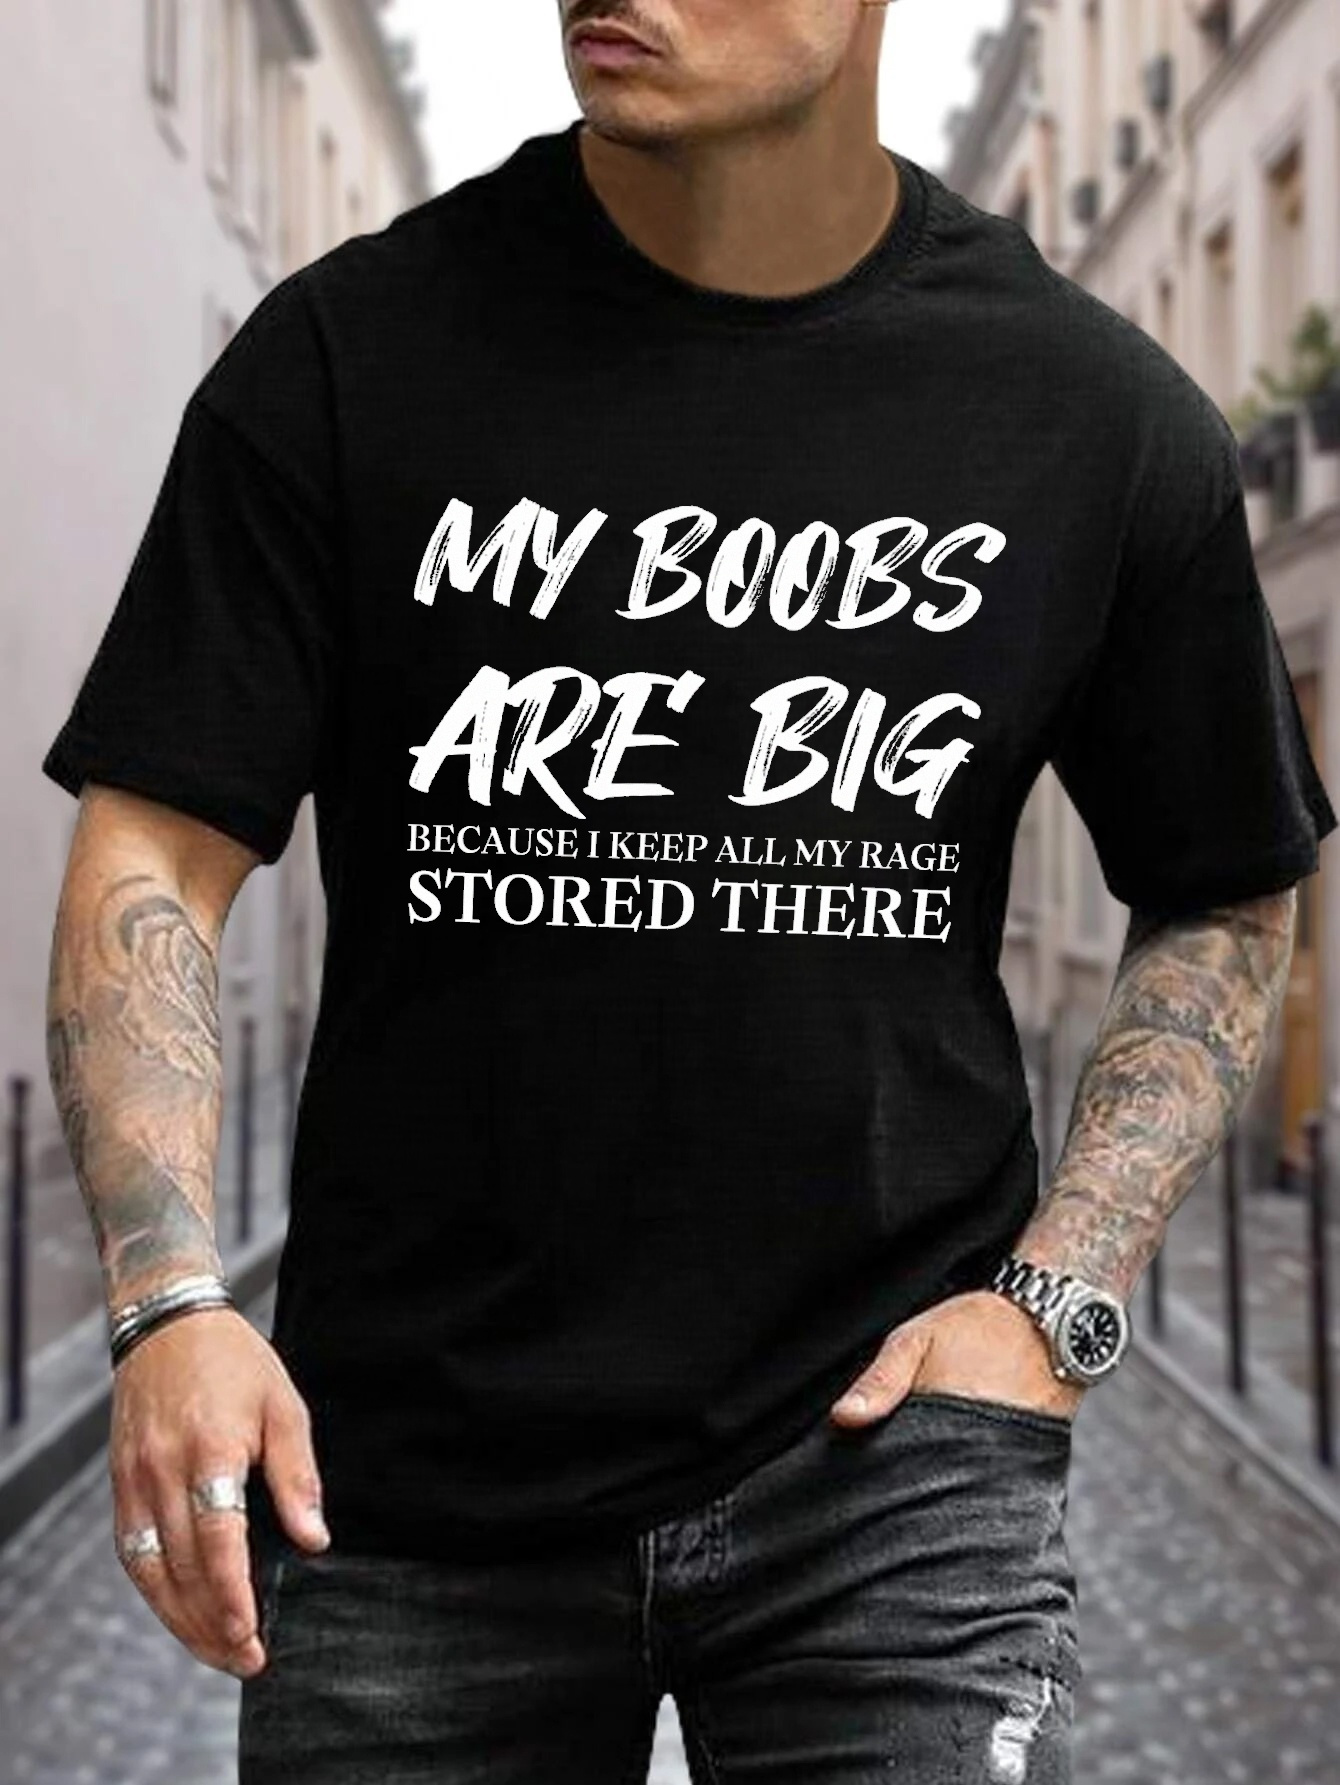 Stop Staring at My Chest, Tee Shirt for Big Boobs, Big Boobs Shirt, Nice  Butt Shirt, Funny Woman's T-shirt, Furnny Woman's Tee, Big Chest T 